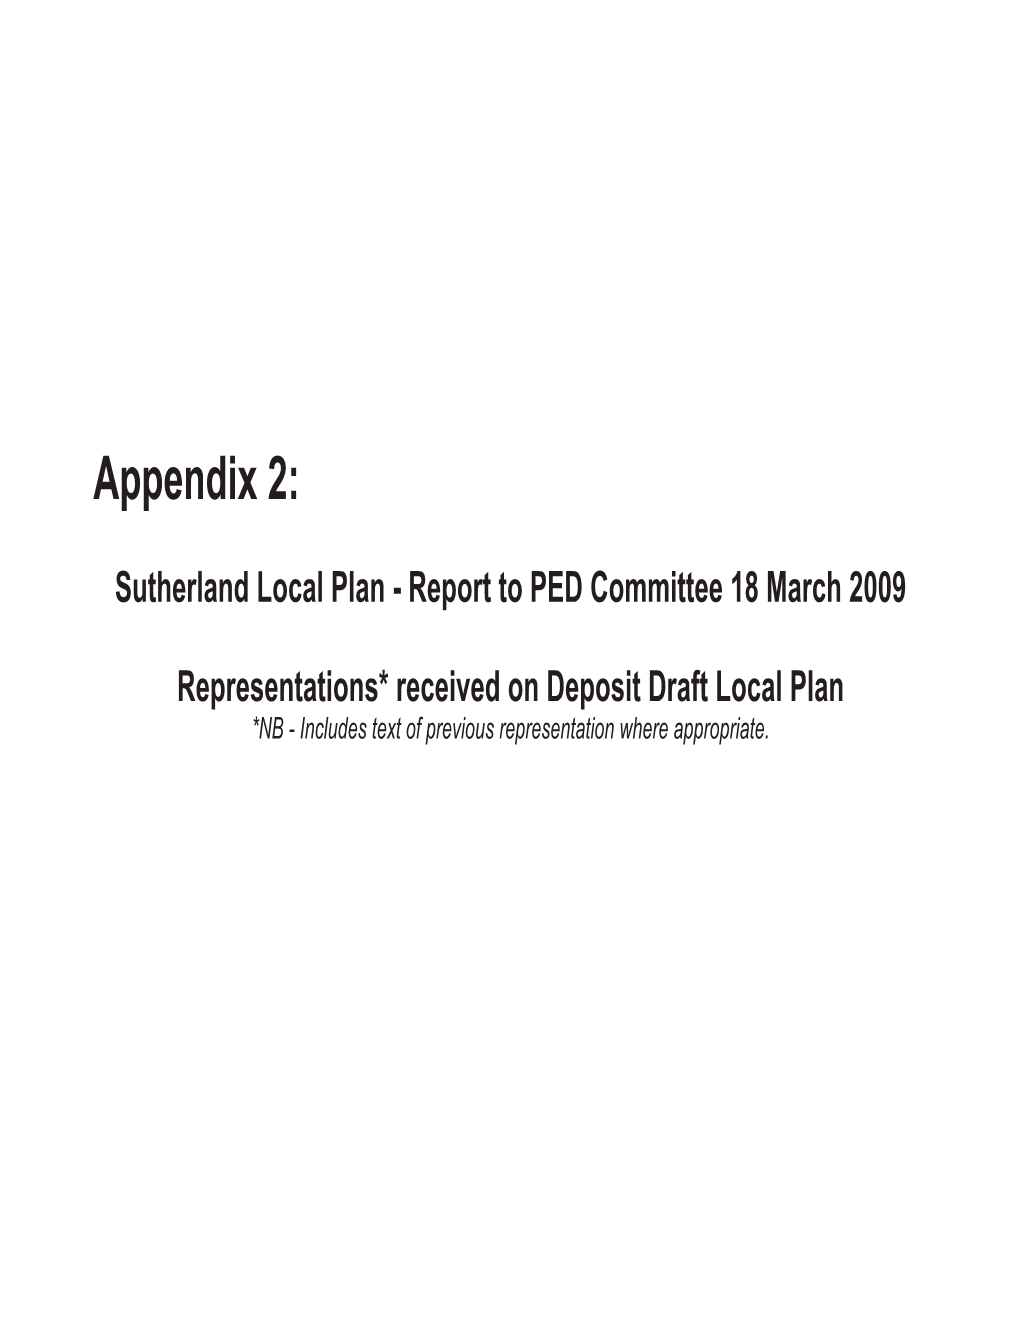 Appendix 2: Sutherland Local Plan